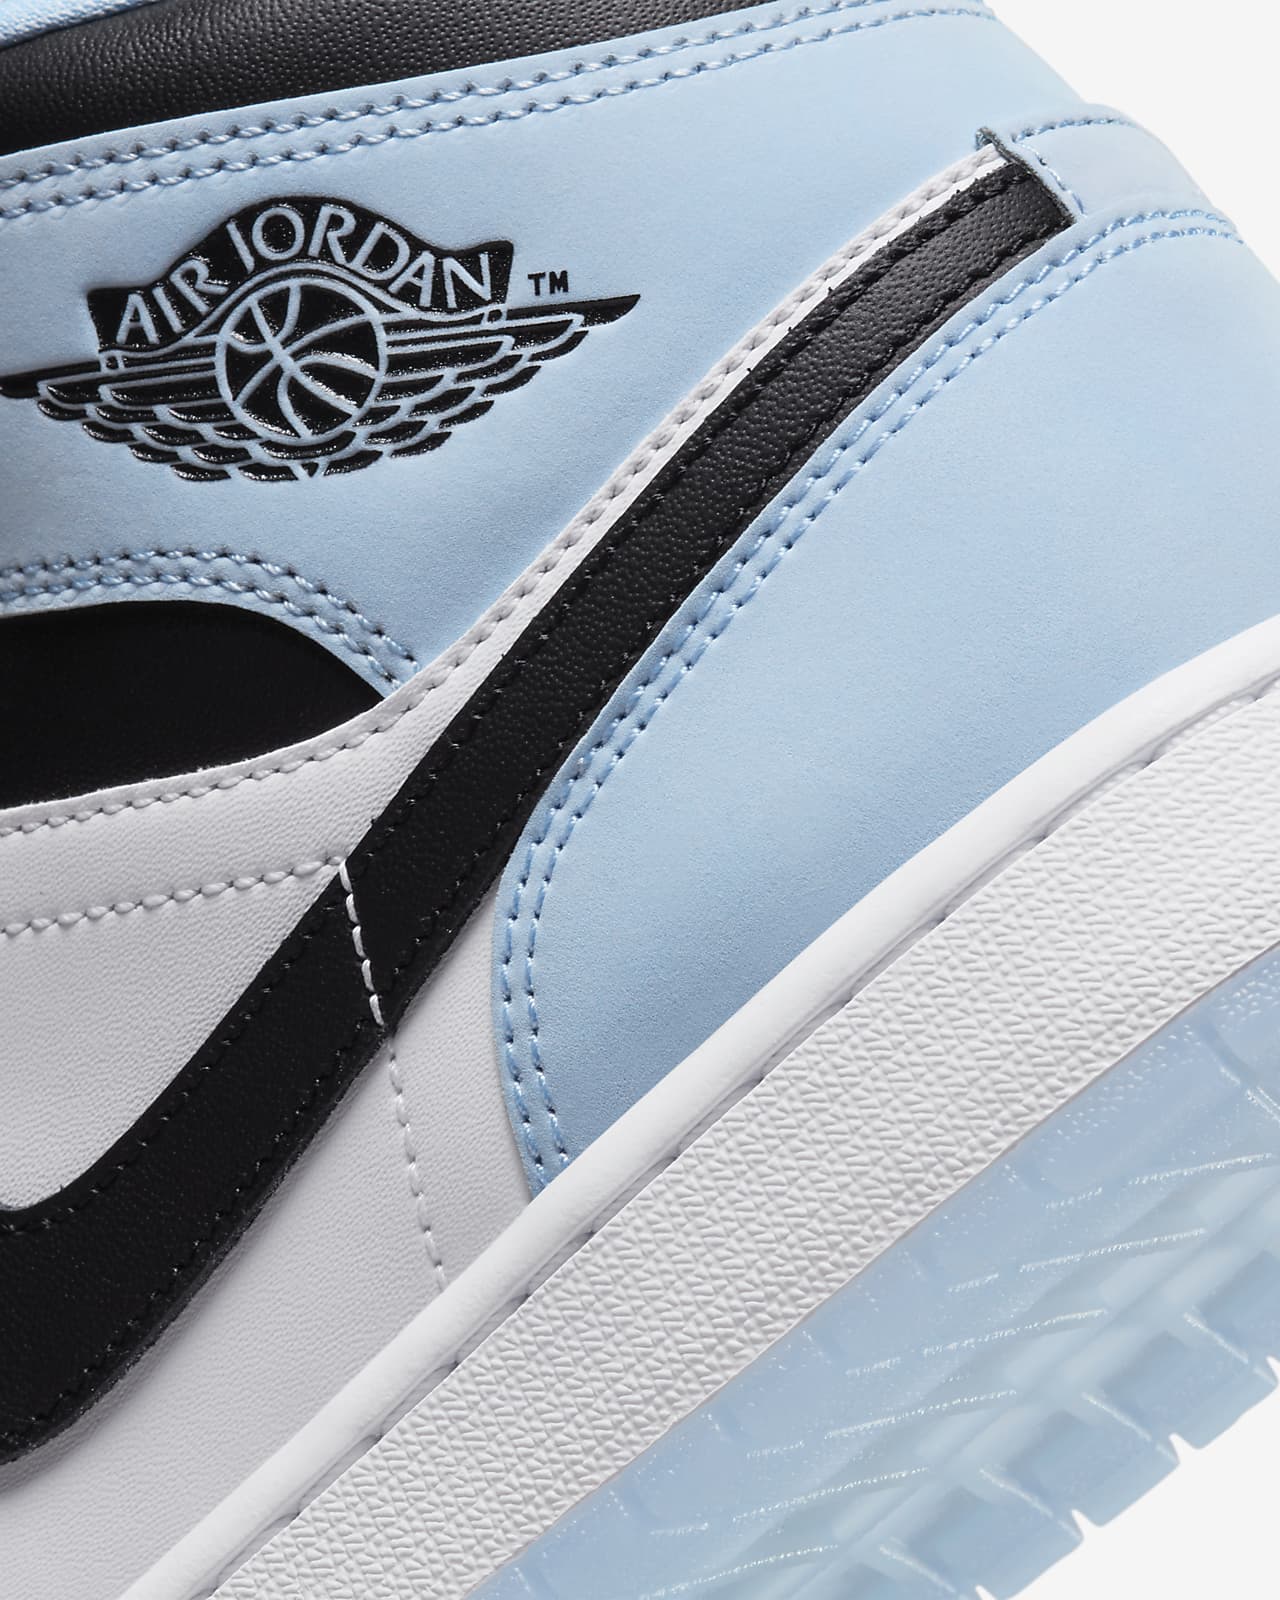 Nike - Air Jordan 1 Mid SE - ICE BLUE